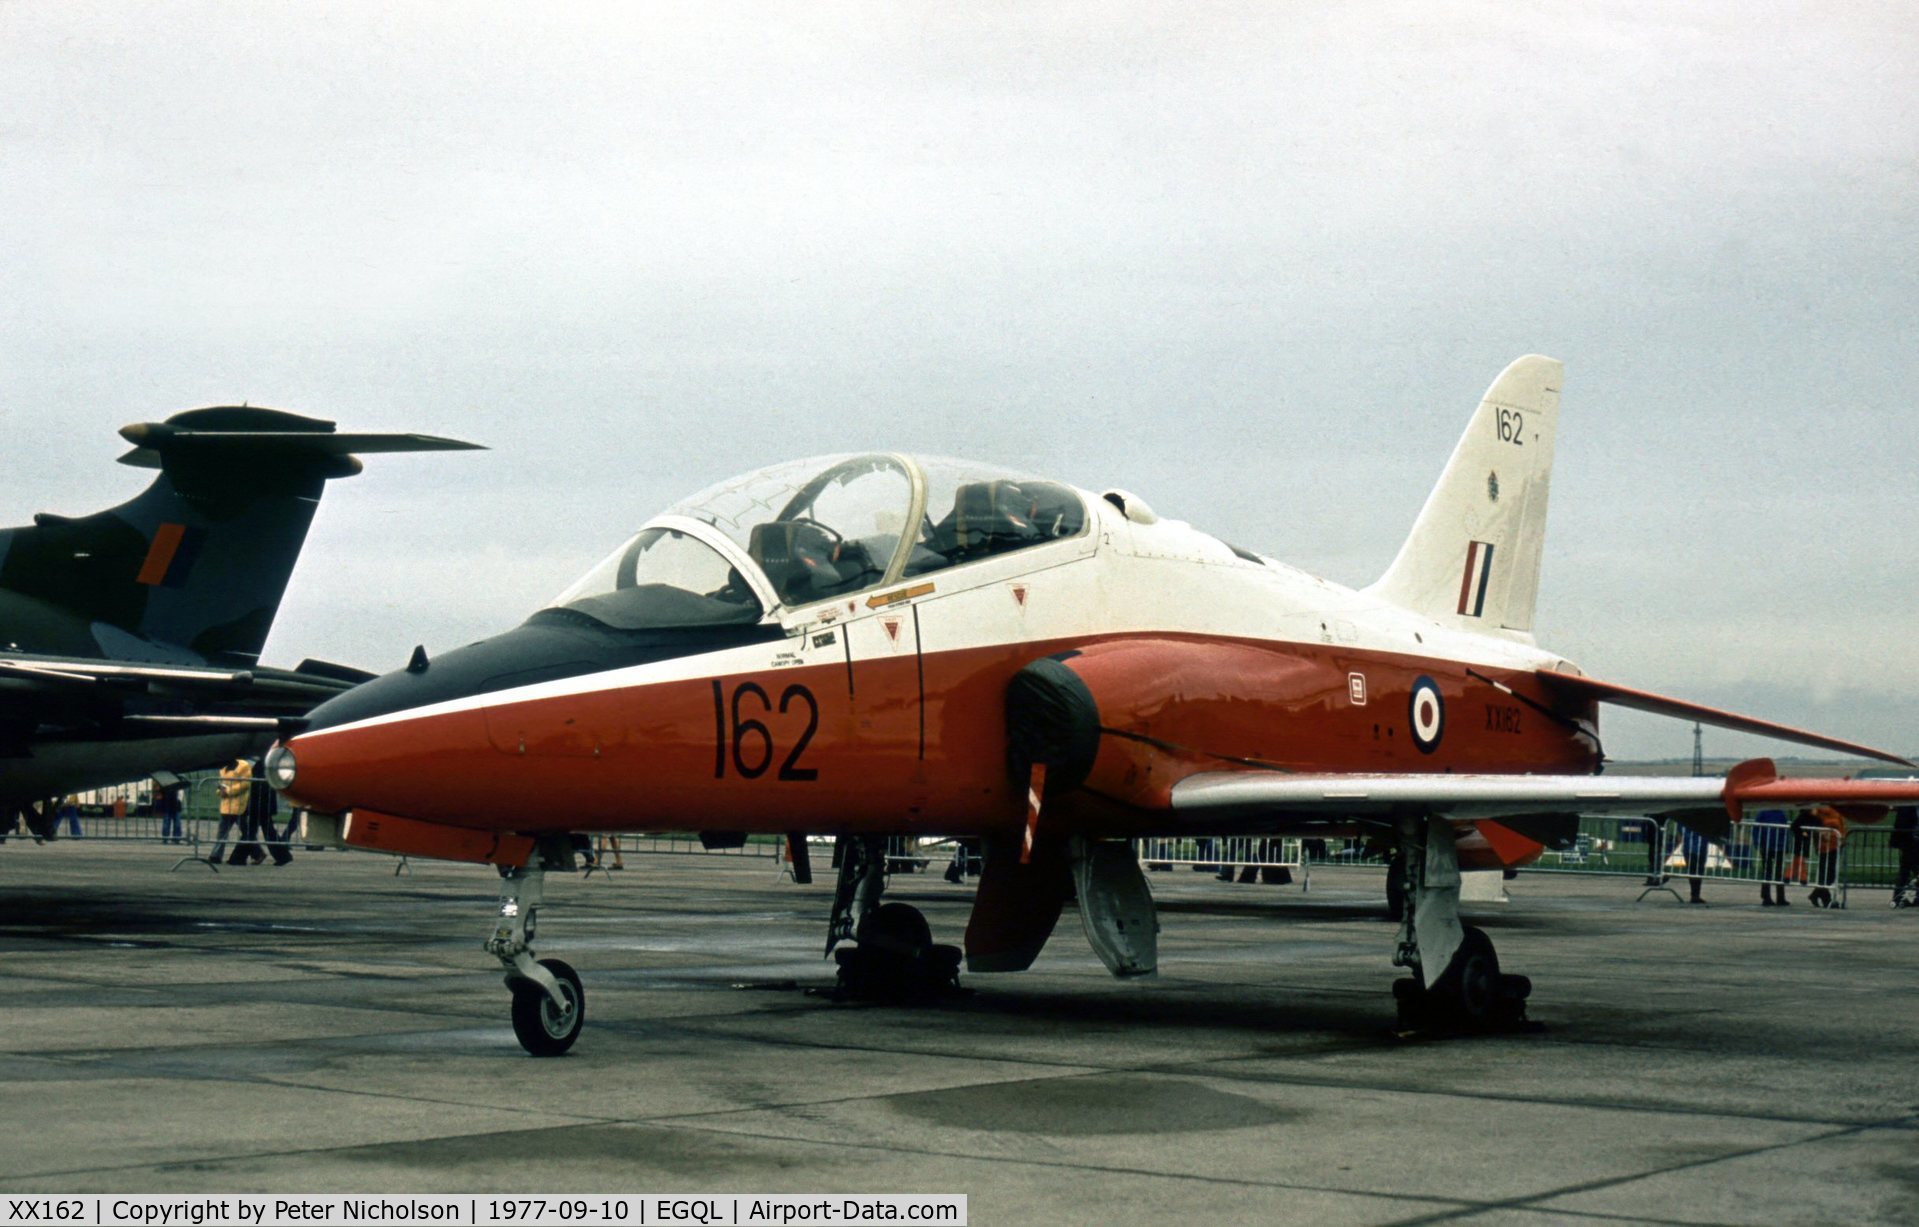 XX162, 1976 Hawker Siddeley Hawk T.1 C/N 009/312009, Hawk T.1 of the Central Flying School displayed at the 1977 RAF Leuchars Airshow.